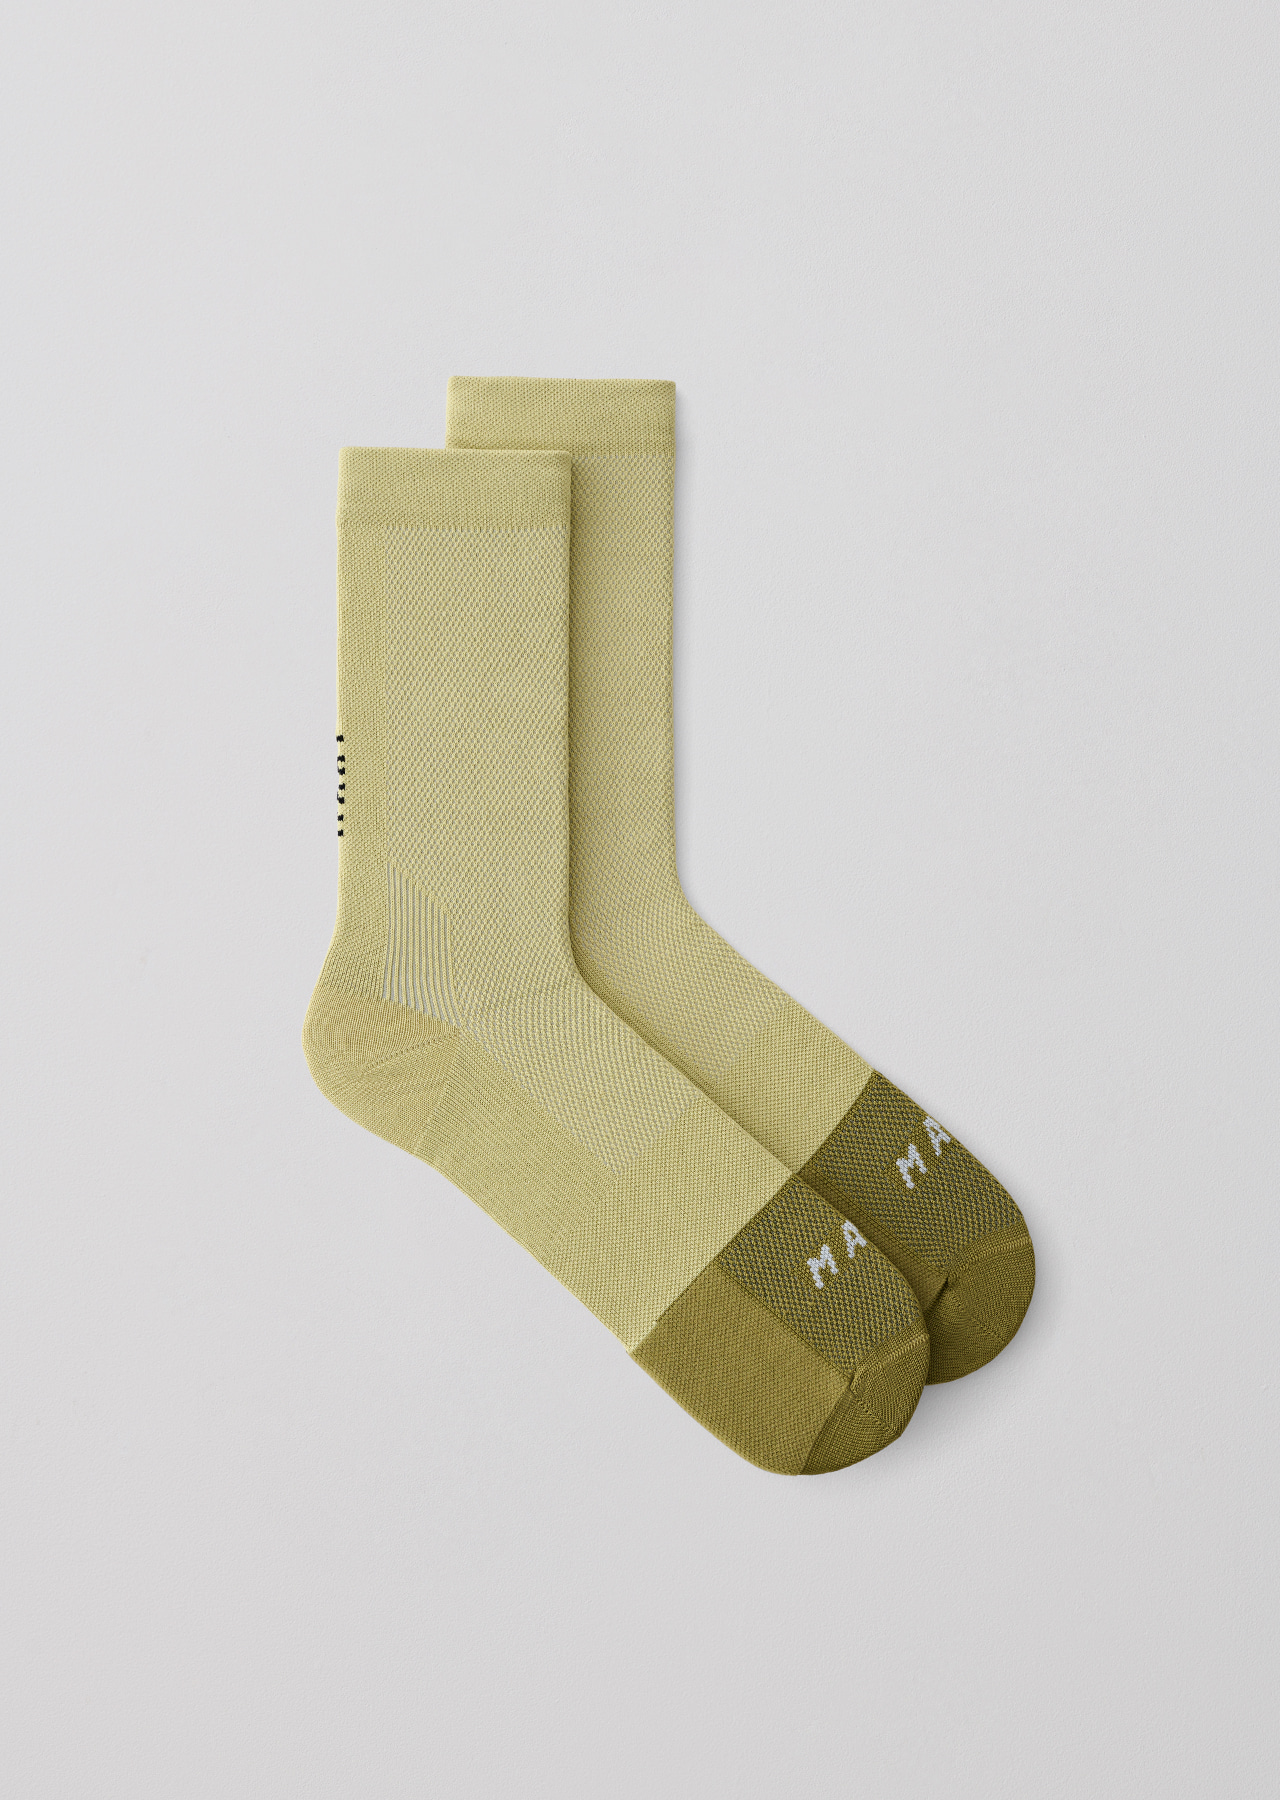 Division Sock (Mineral)